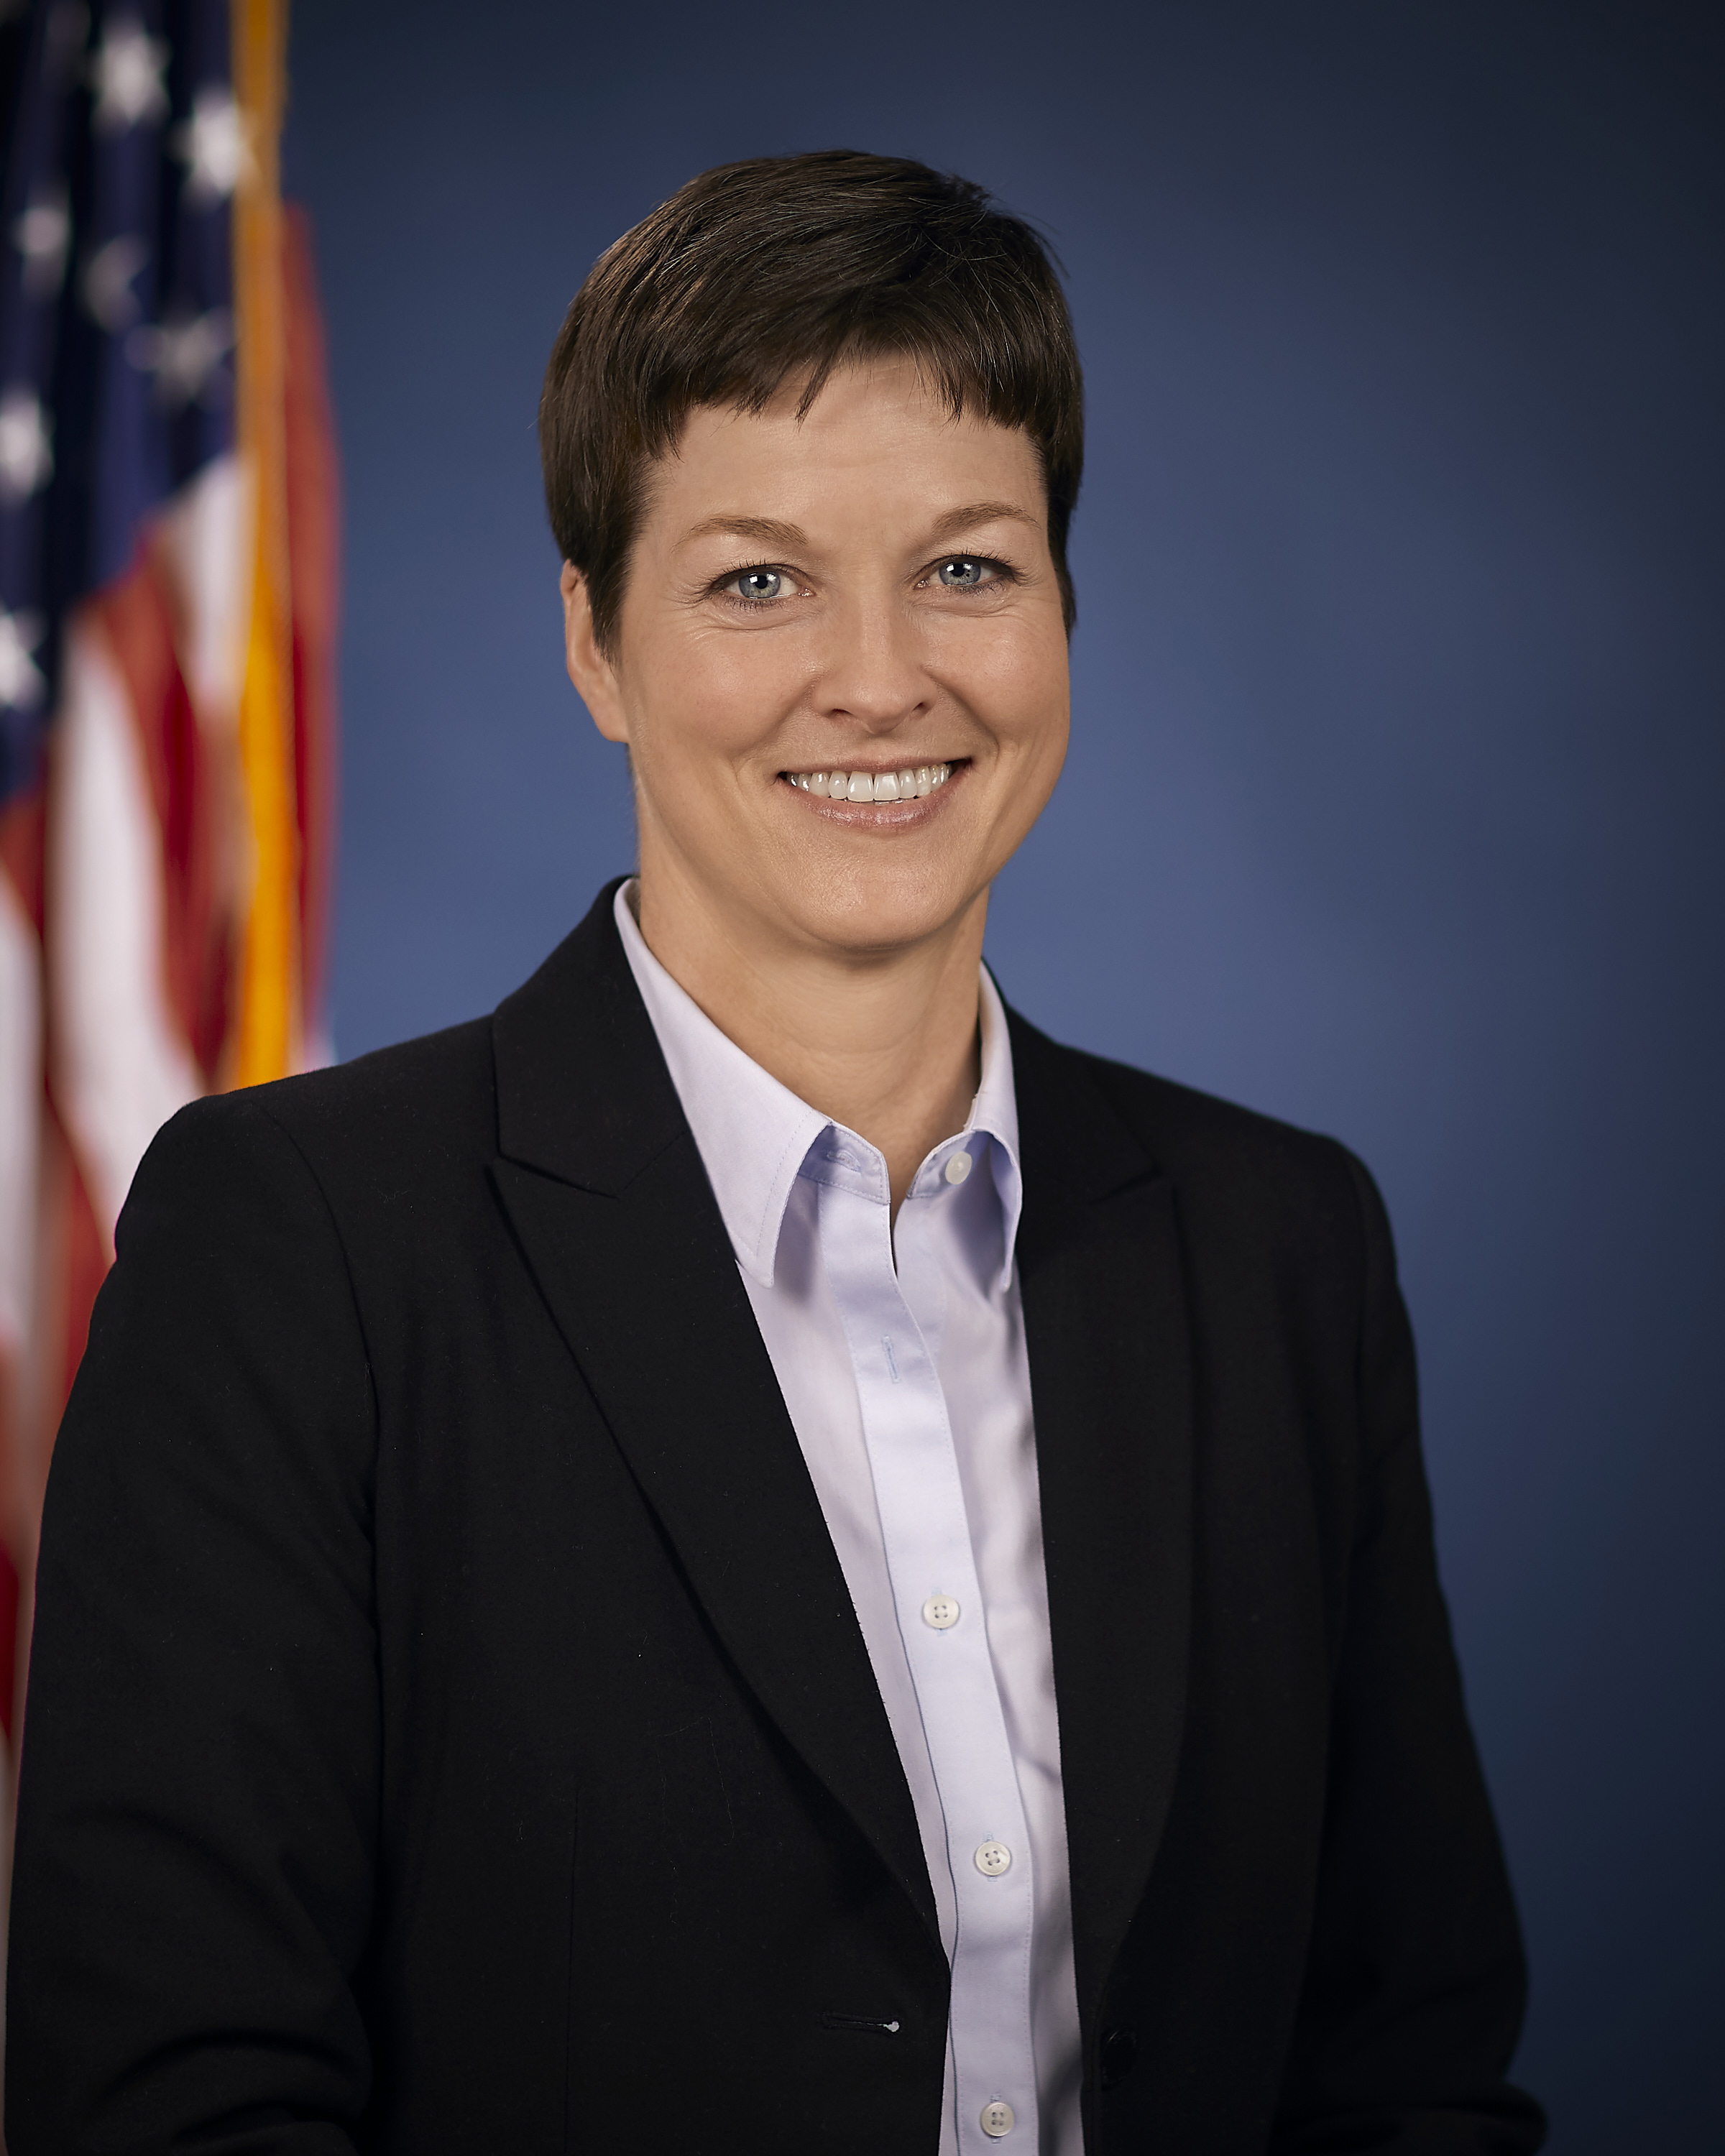 DHS Secretary Teresa Miller